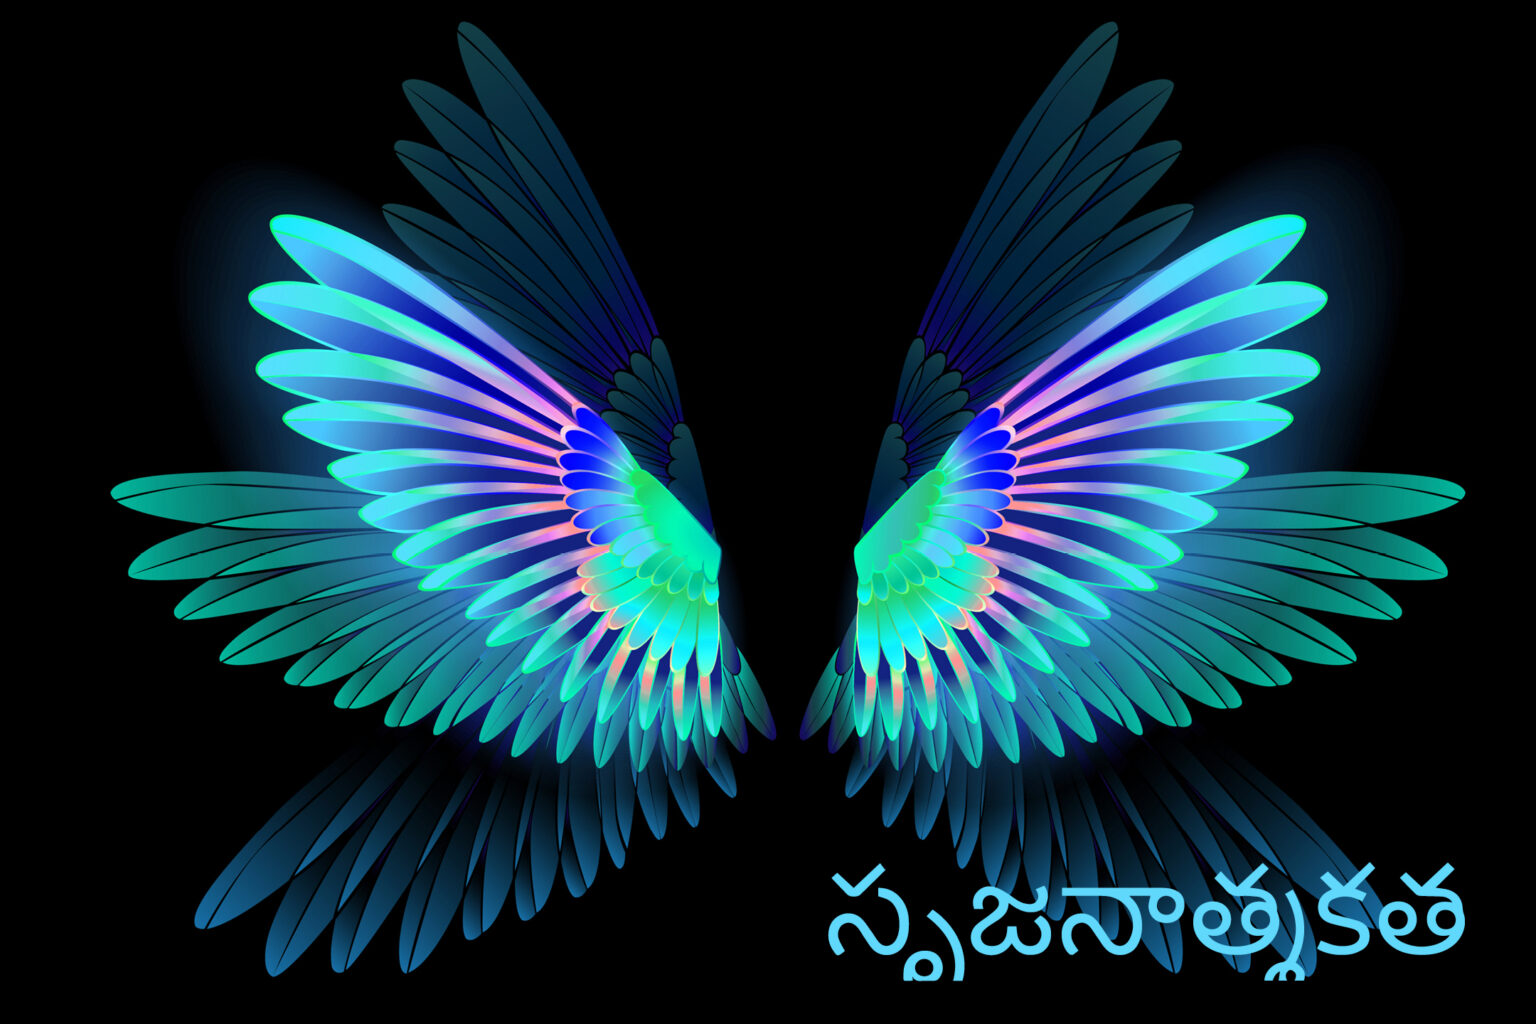 Granite Bay Graphic Design: Creativity: Image of Brightly Colored Mirrored Bird’s Wings